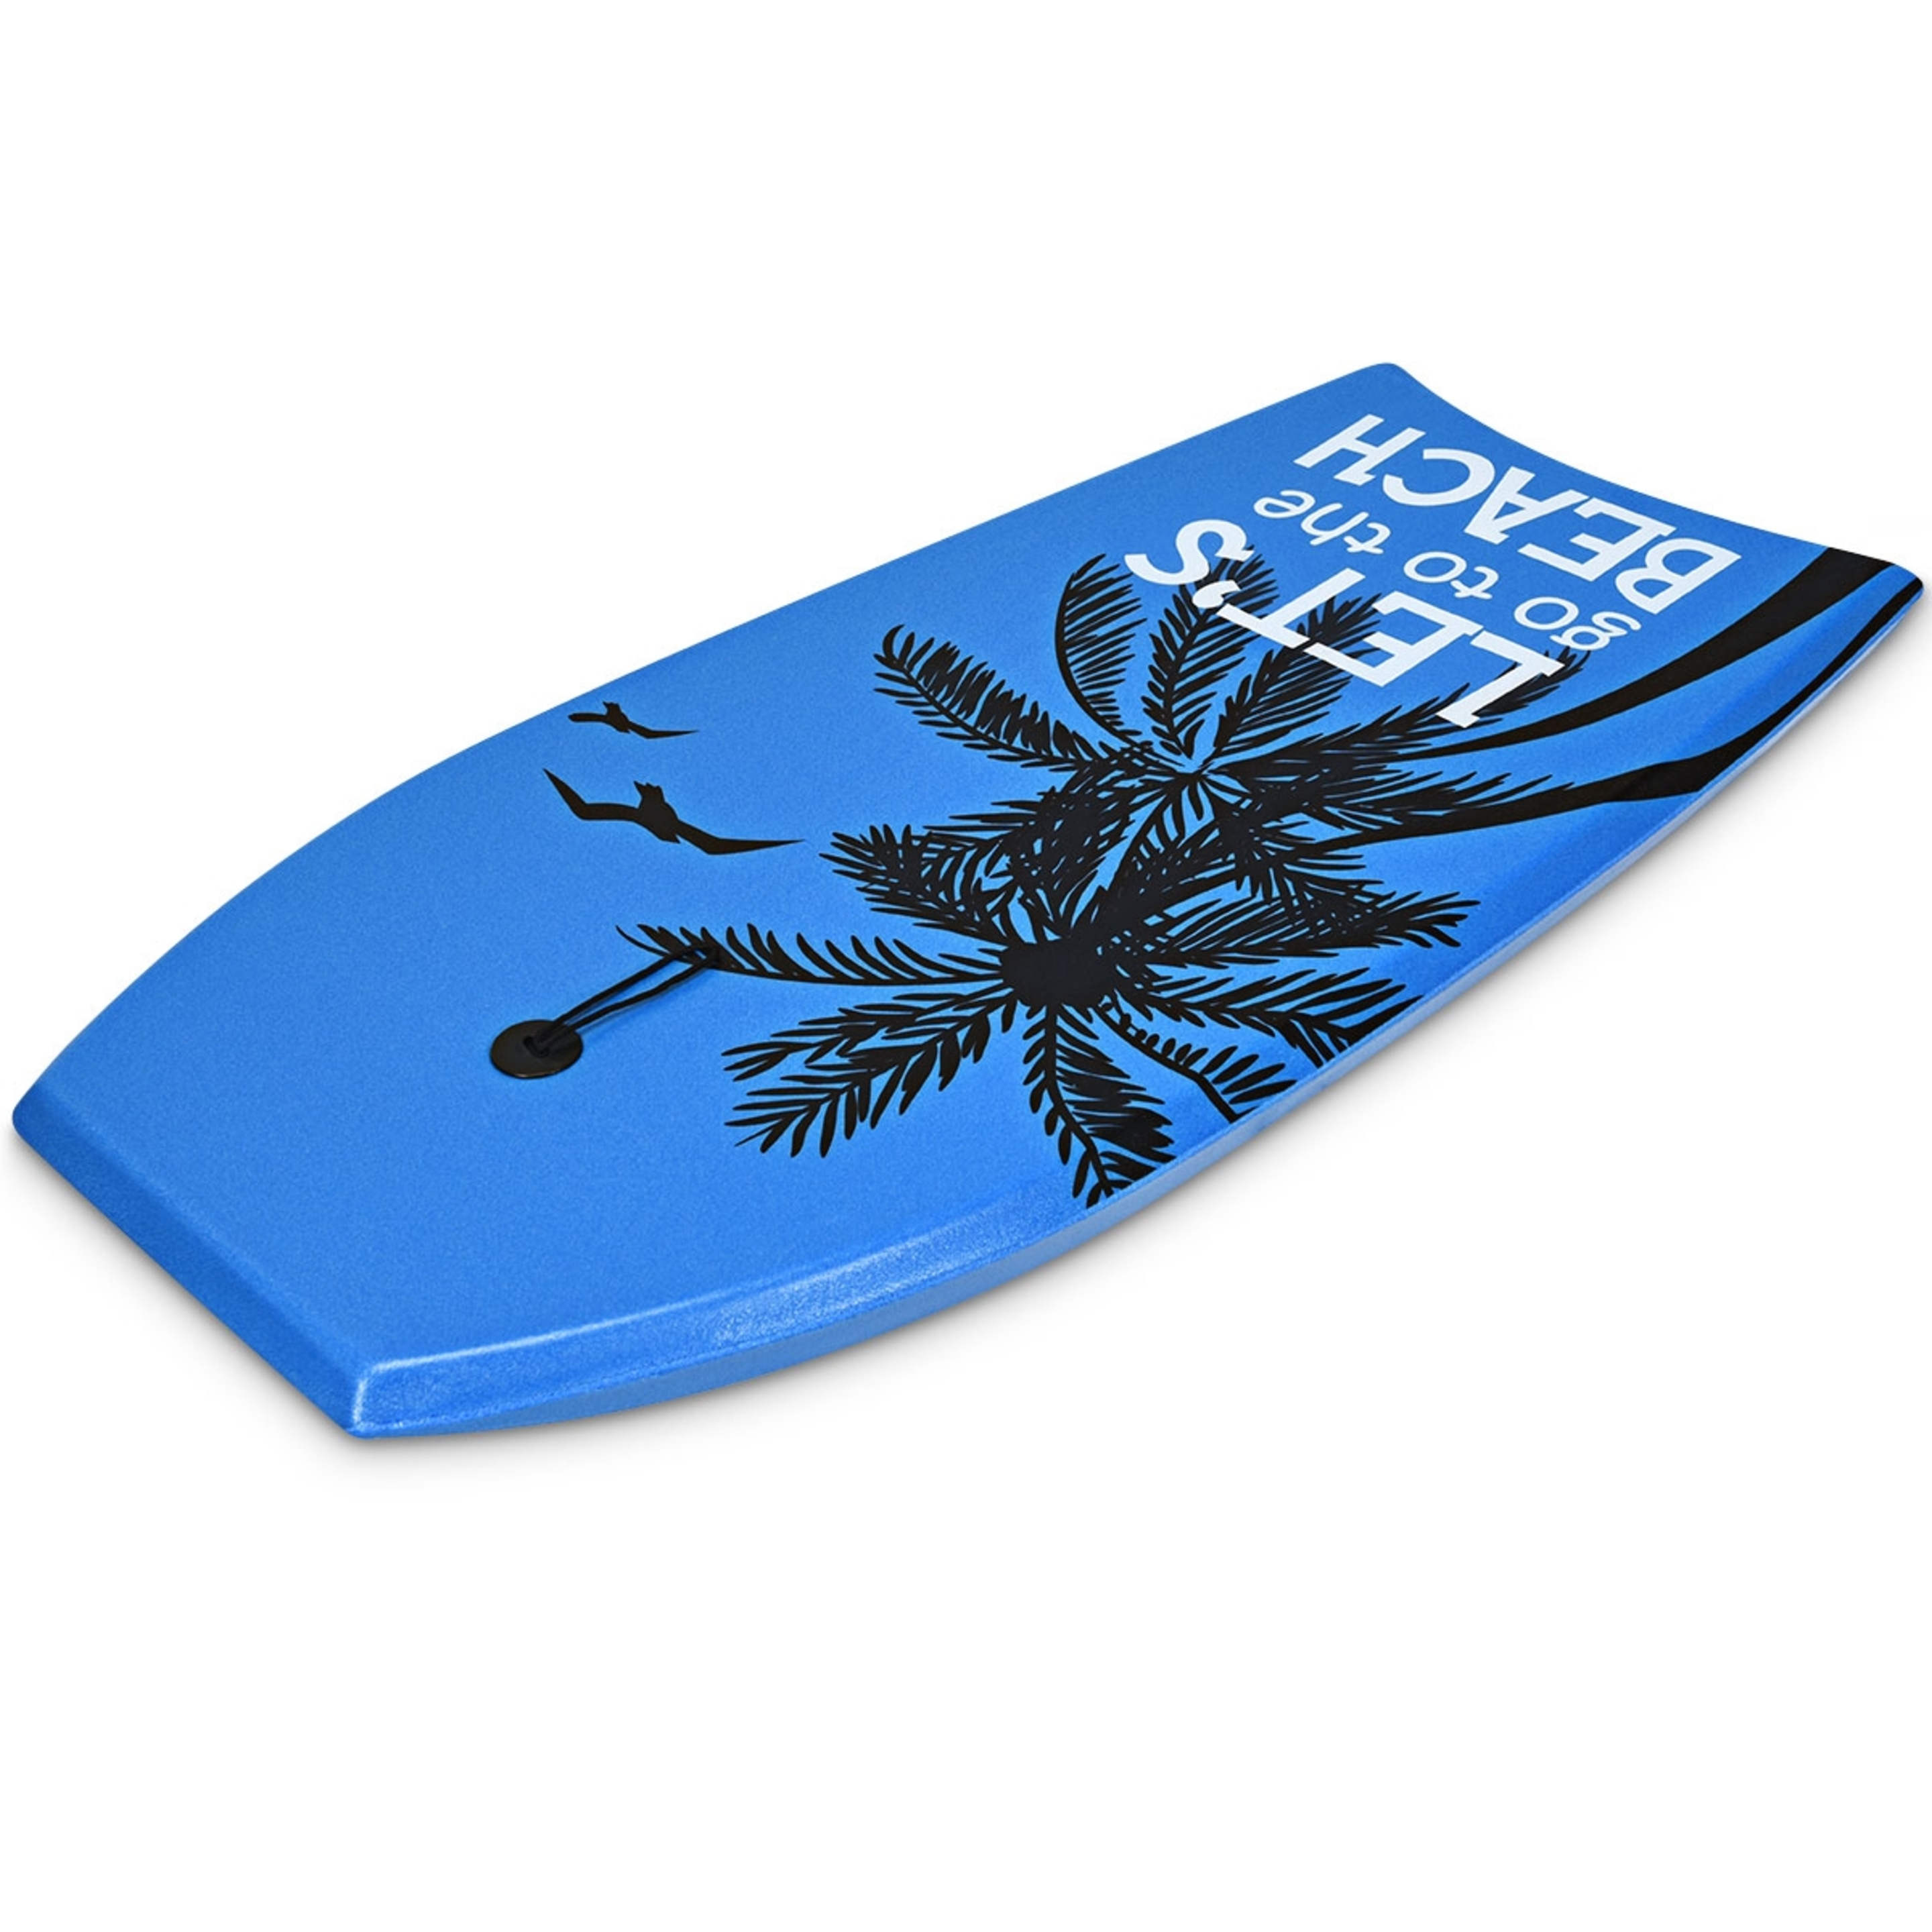 Costway Tabla De Surf Bodyboard Azul 104 X 51 Cm - azul - 